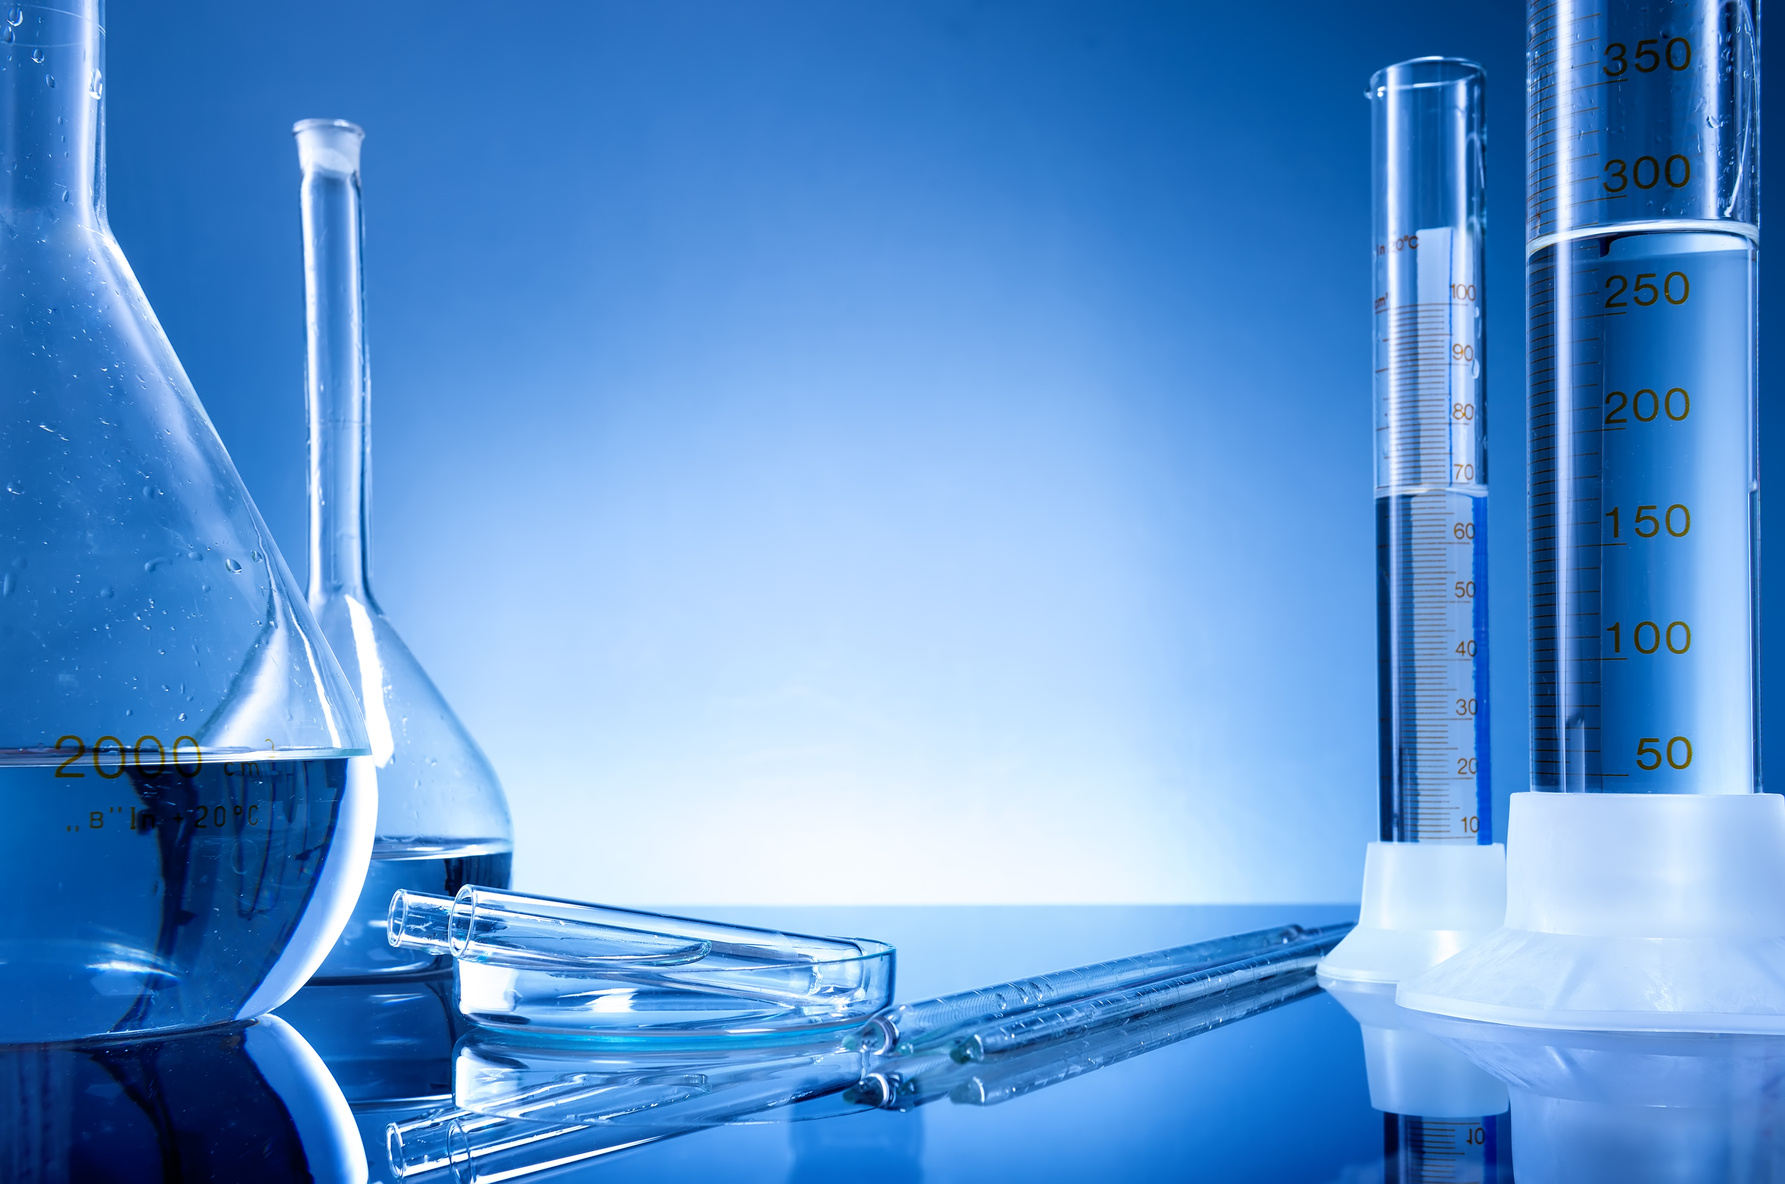 Laboratory equipment, bottles, flasks on blue background